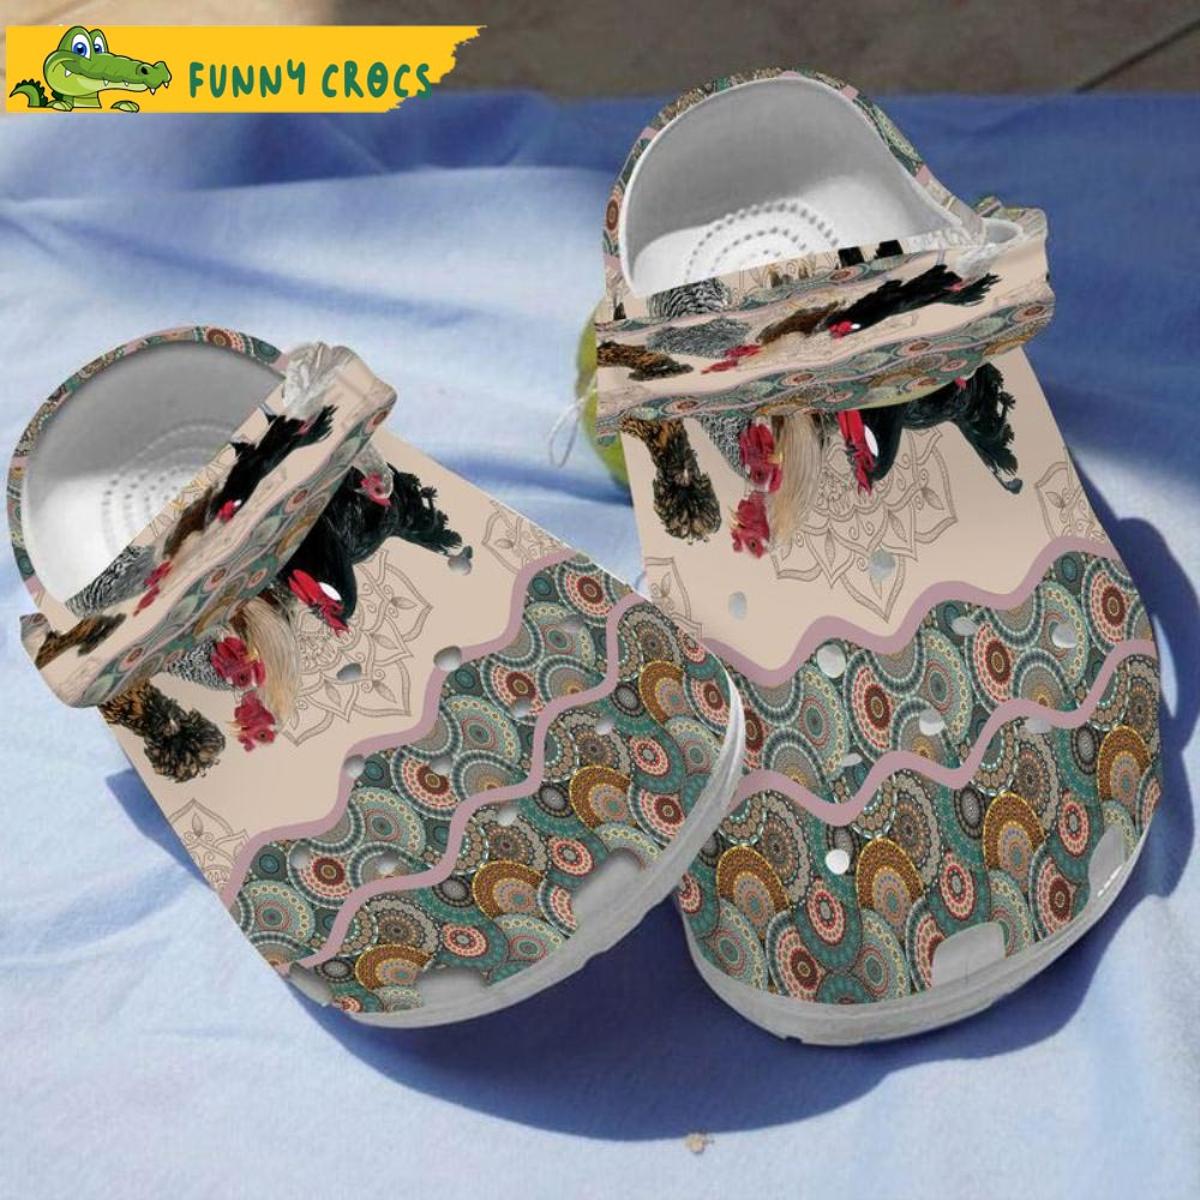 Chicken And Pumpkin Sleigh Love Snows Gift Crocs Clog Shoes